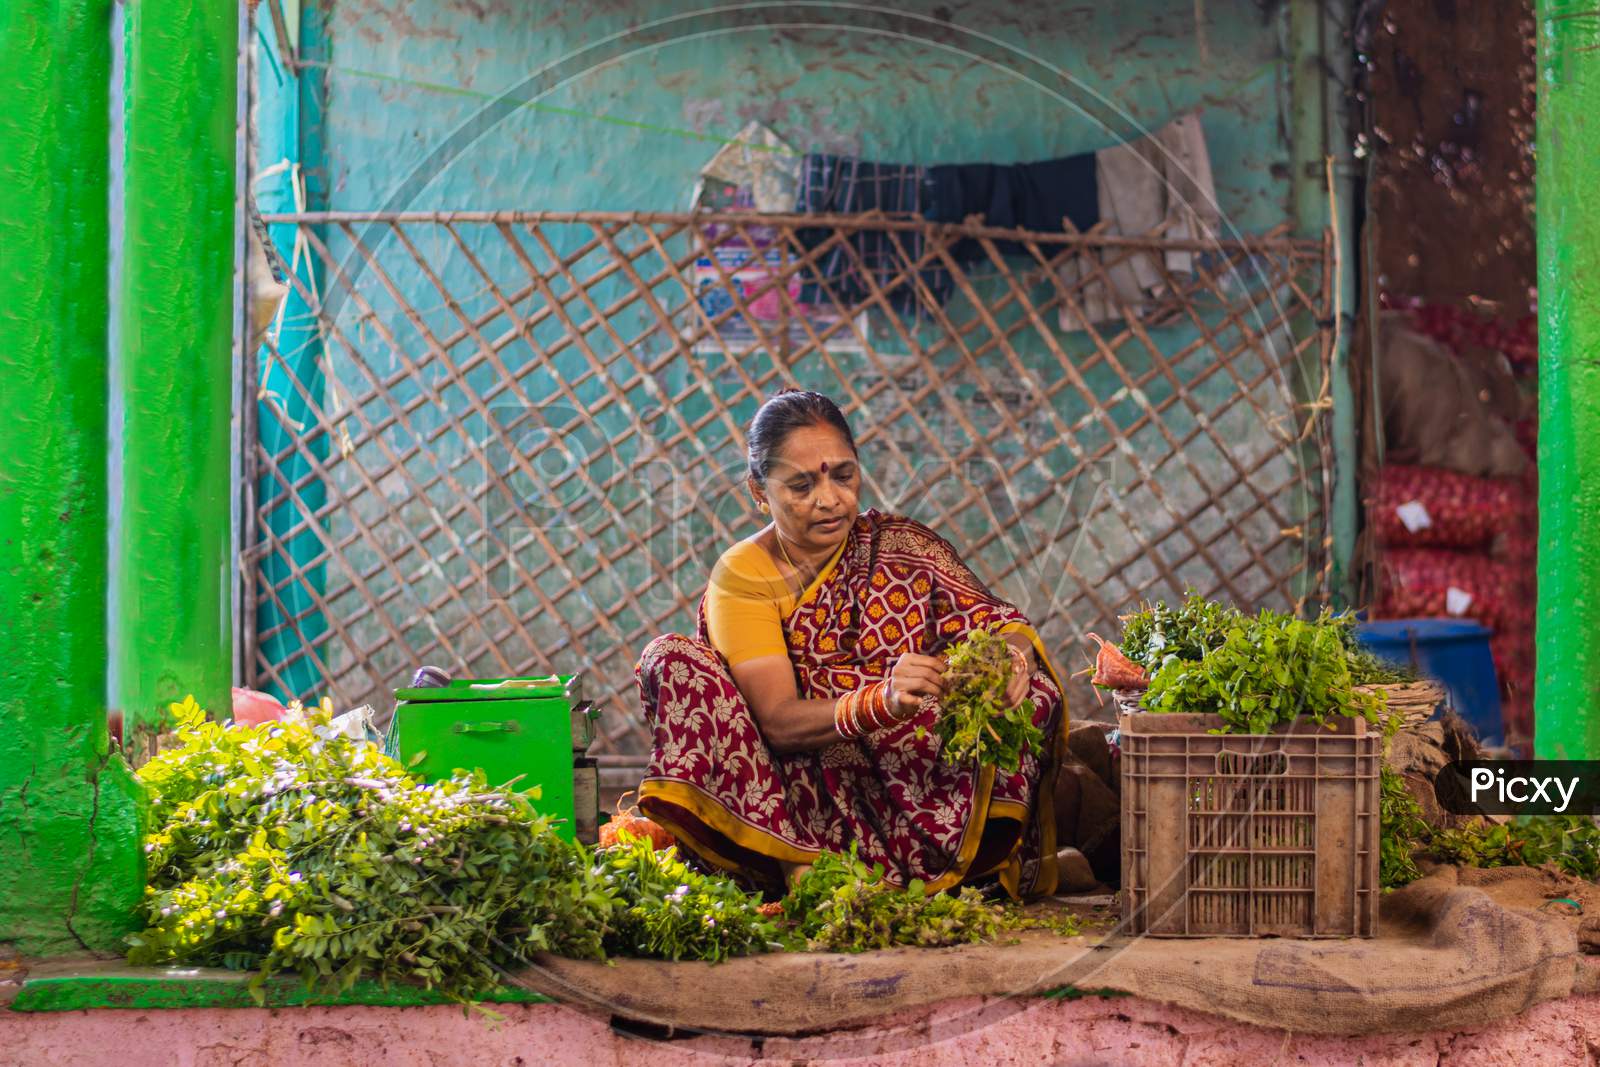 Indian Vegetable Vendors At Stalls